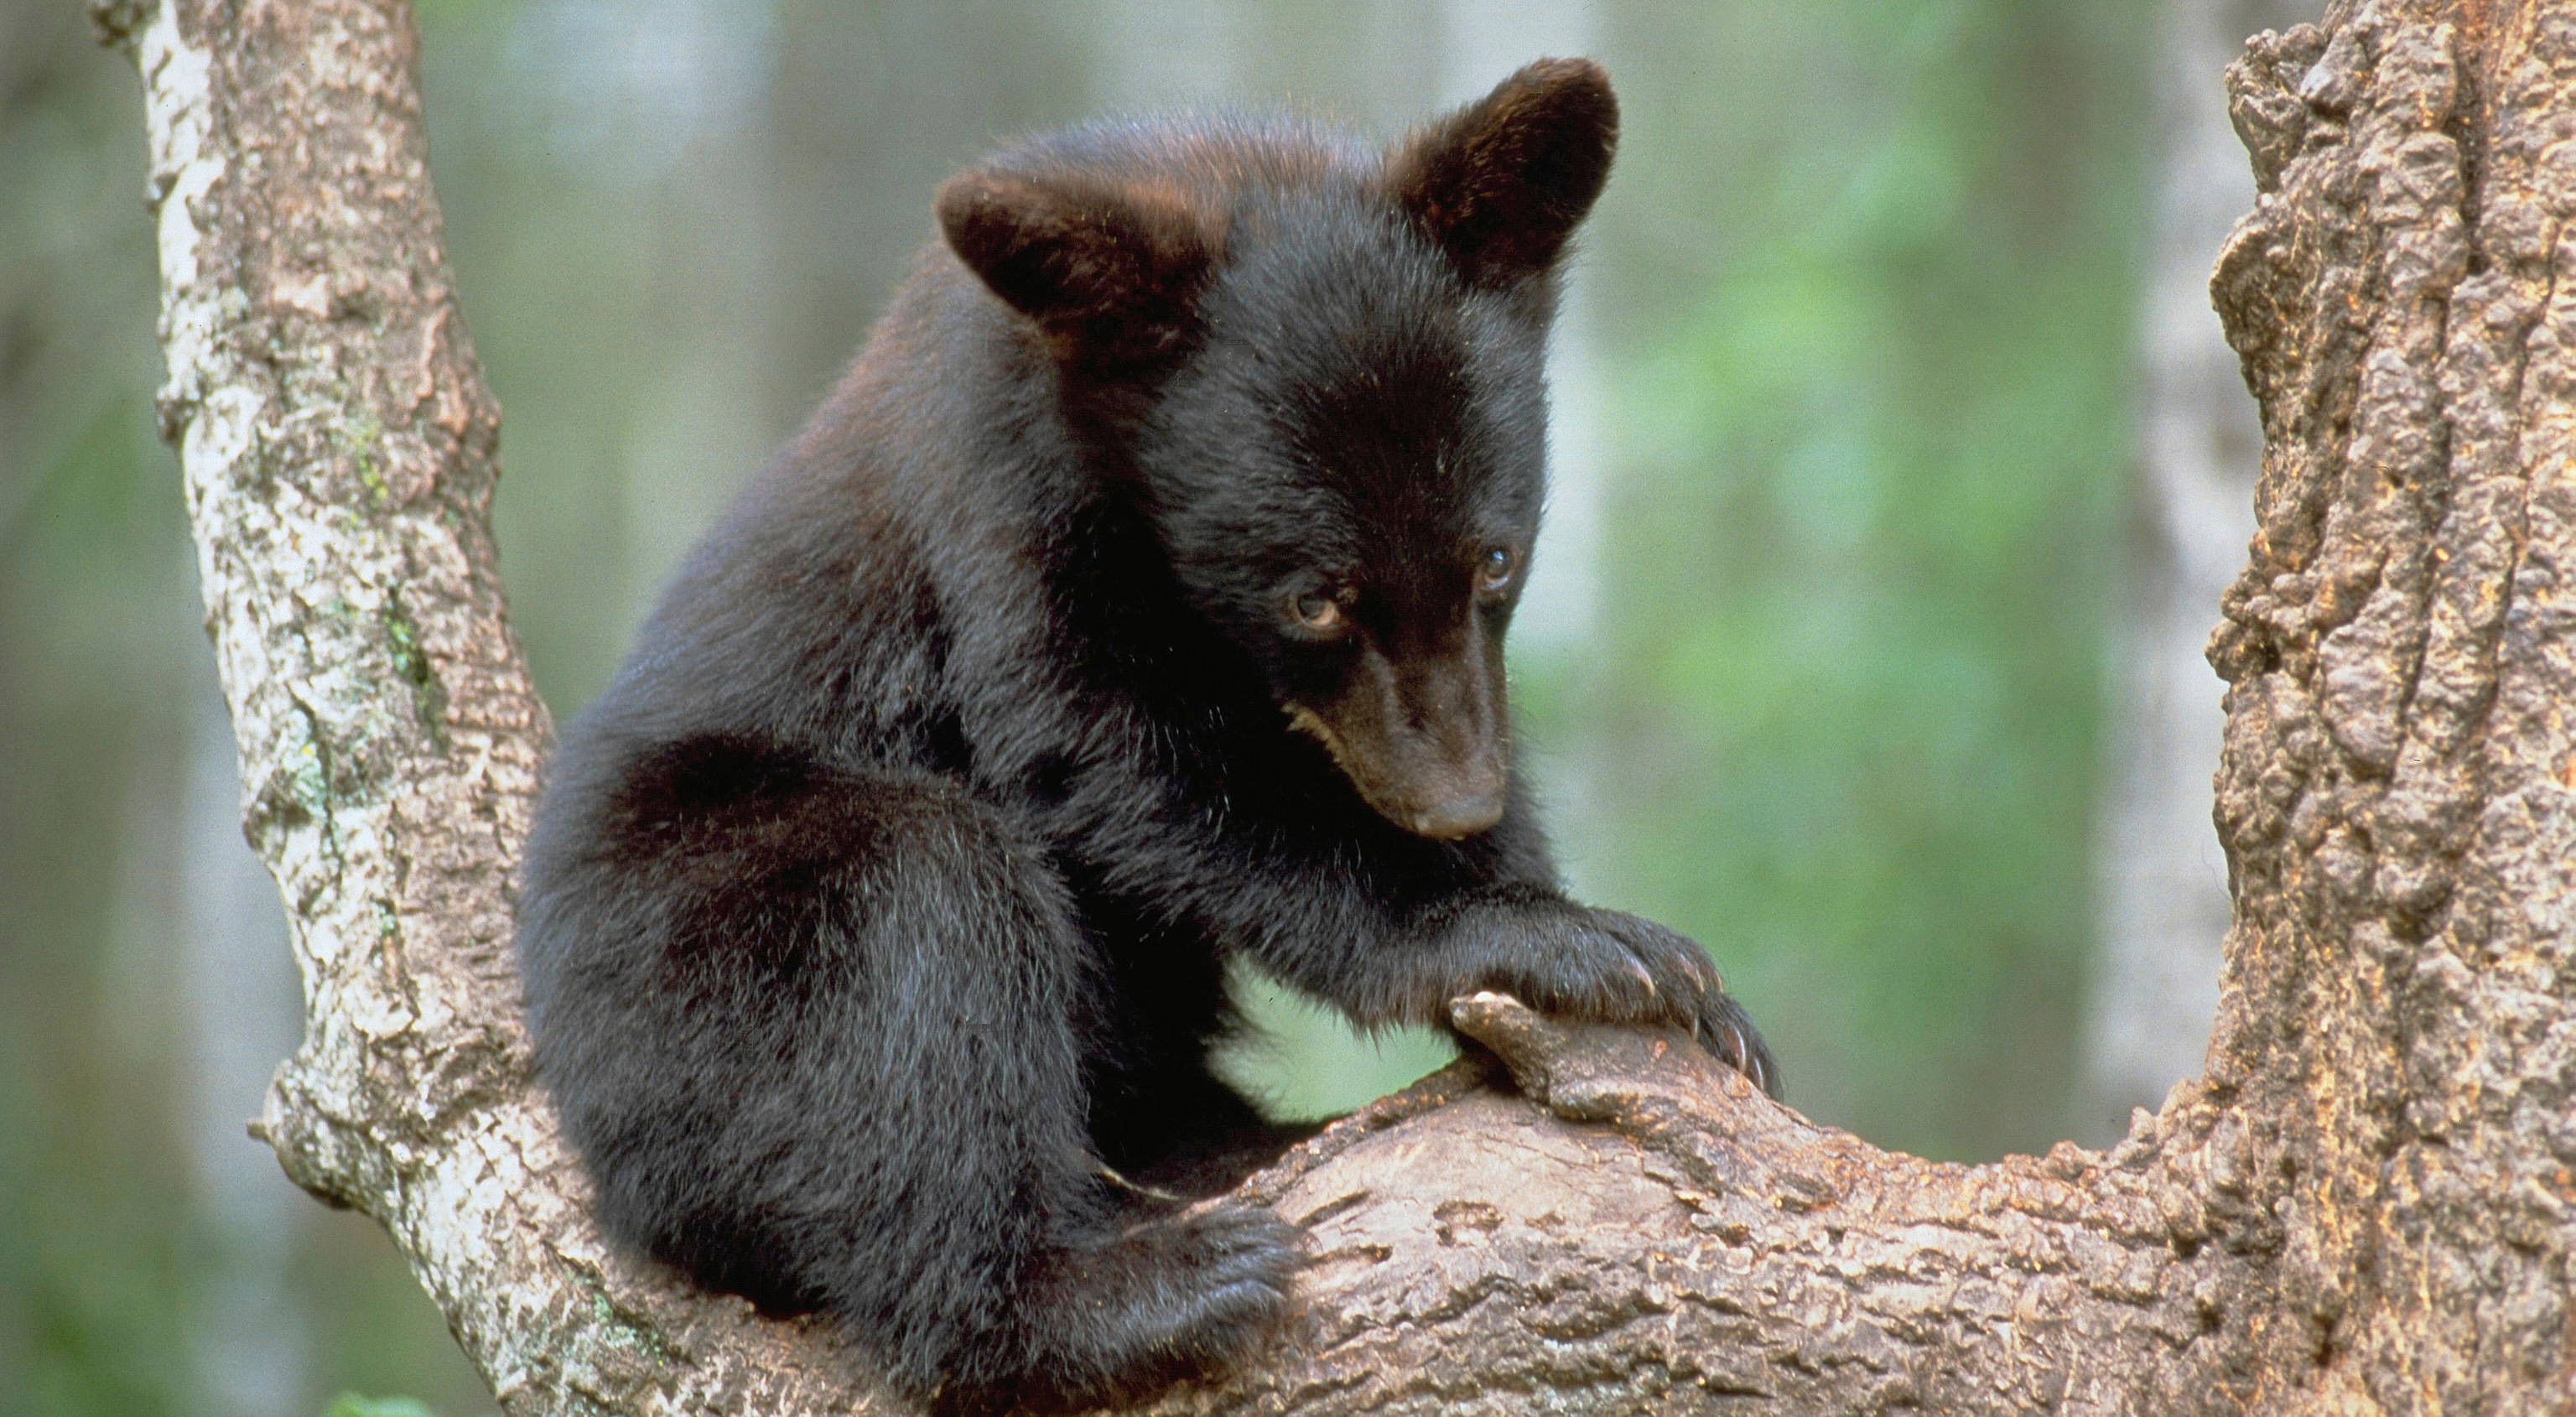 A black bear sits on a branch.